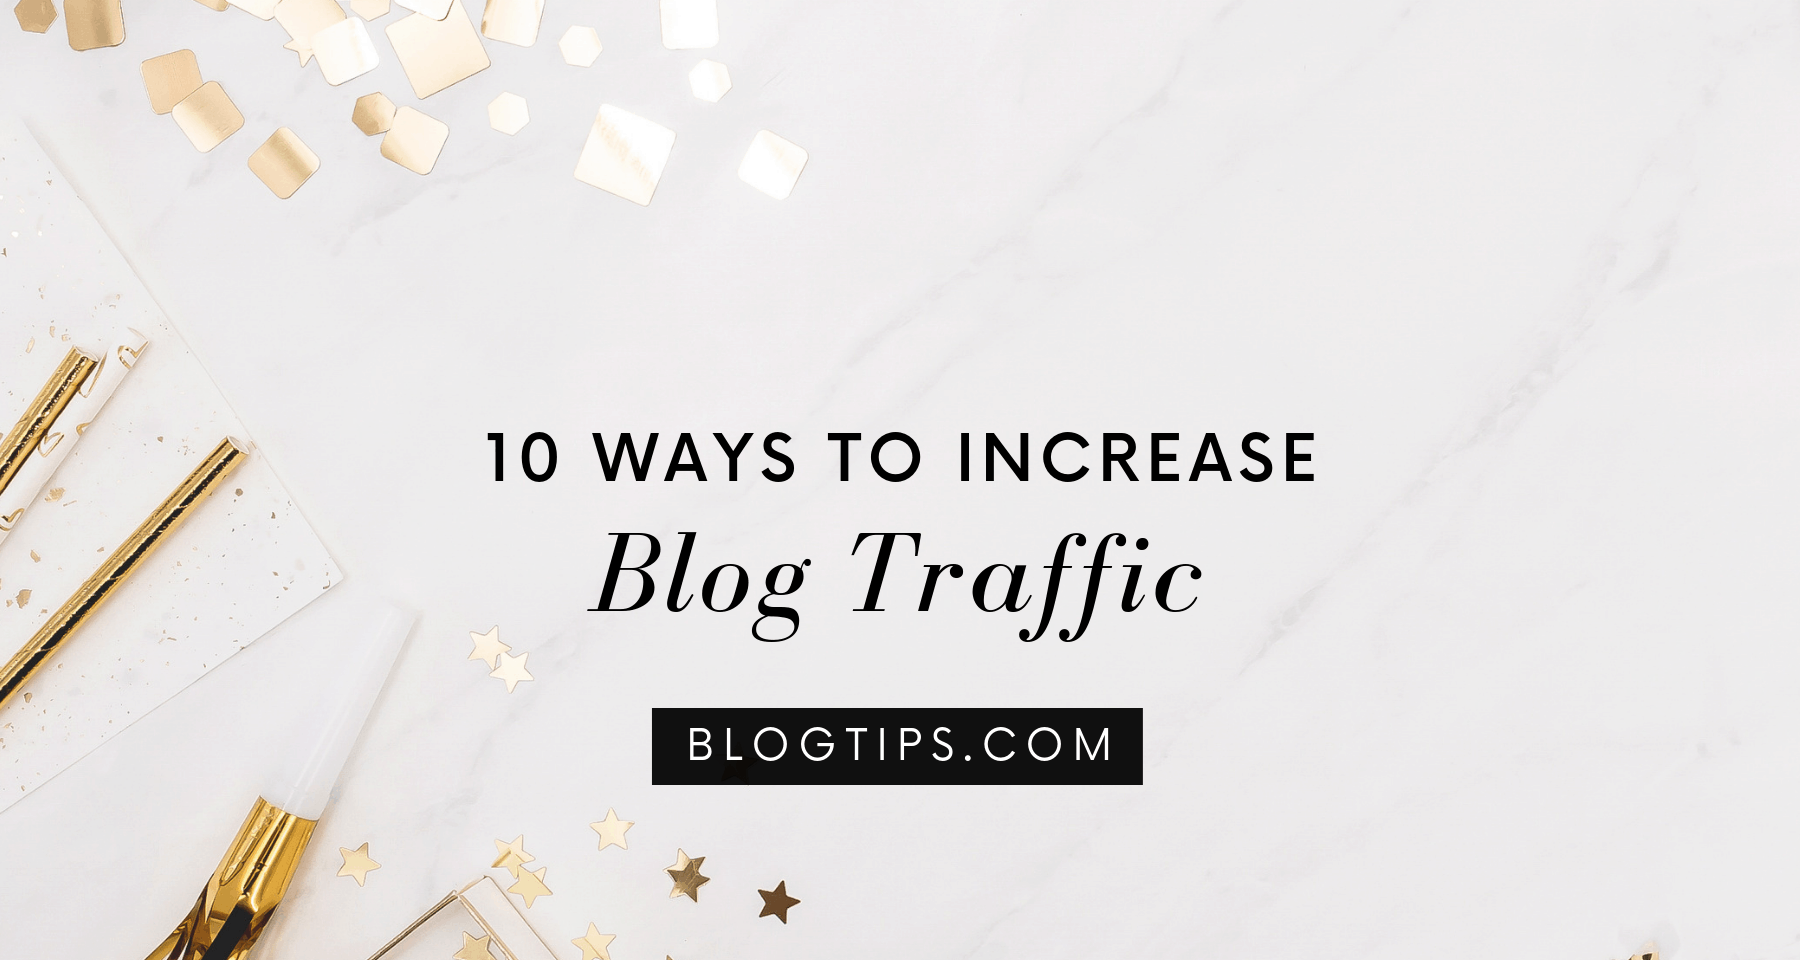 10 ways to increase blog traffic BlogTips.com